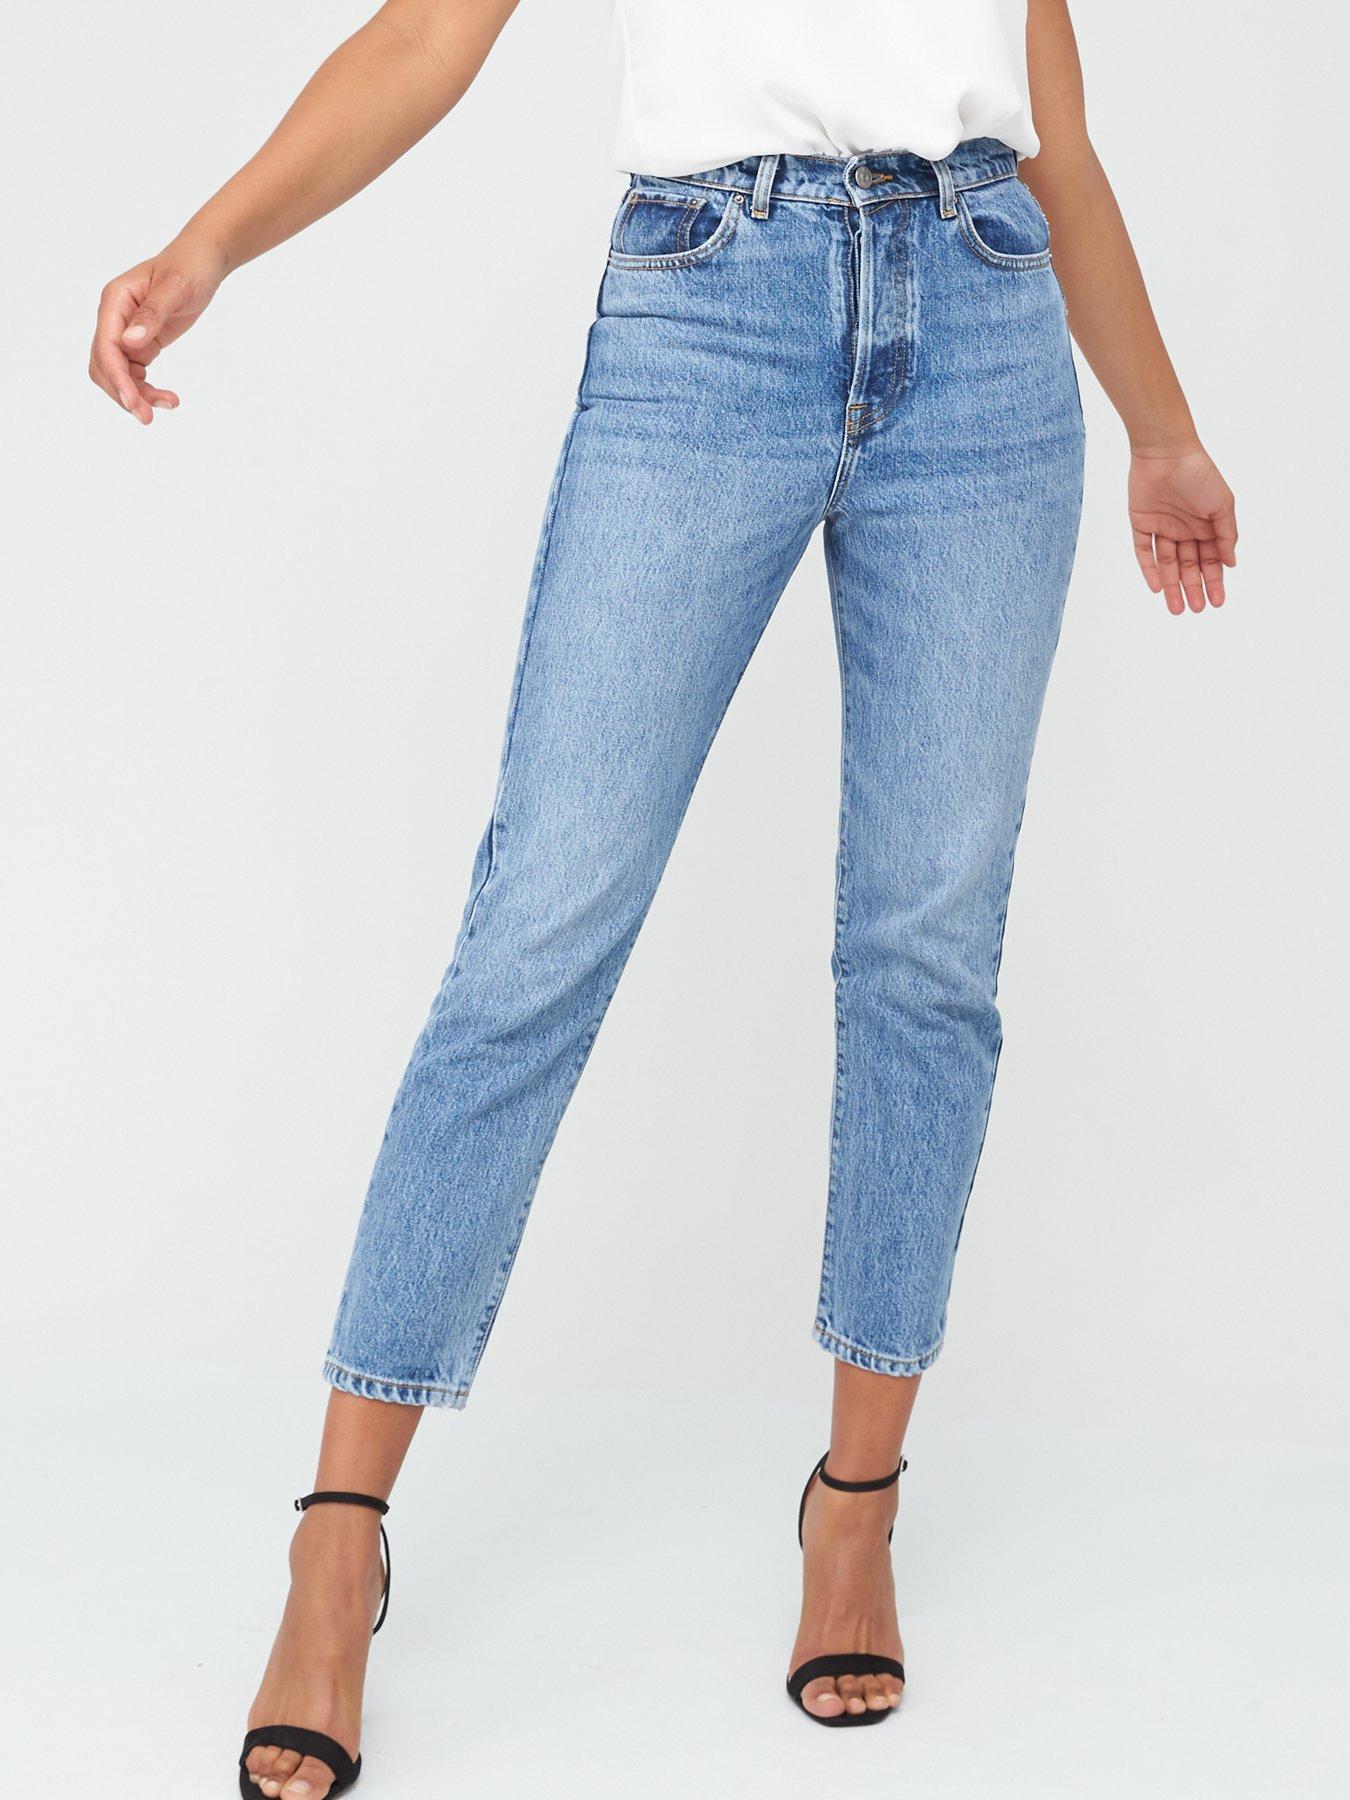 womens slim leg jeans uk